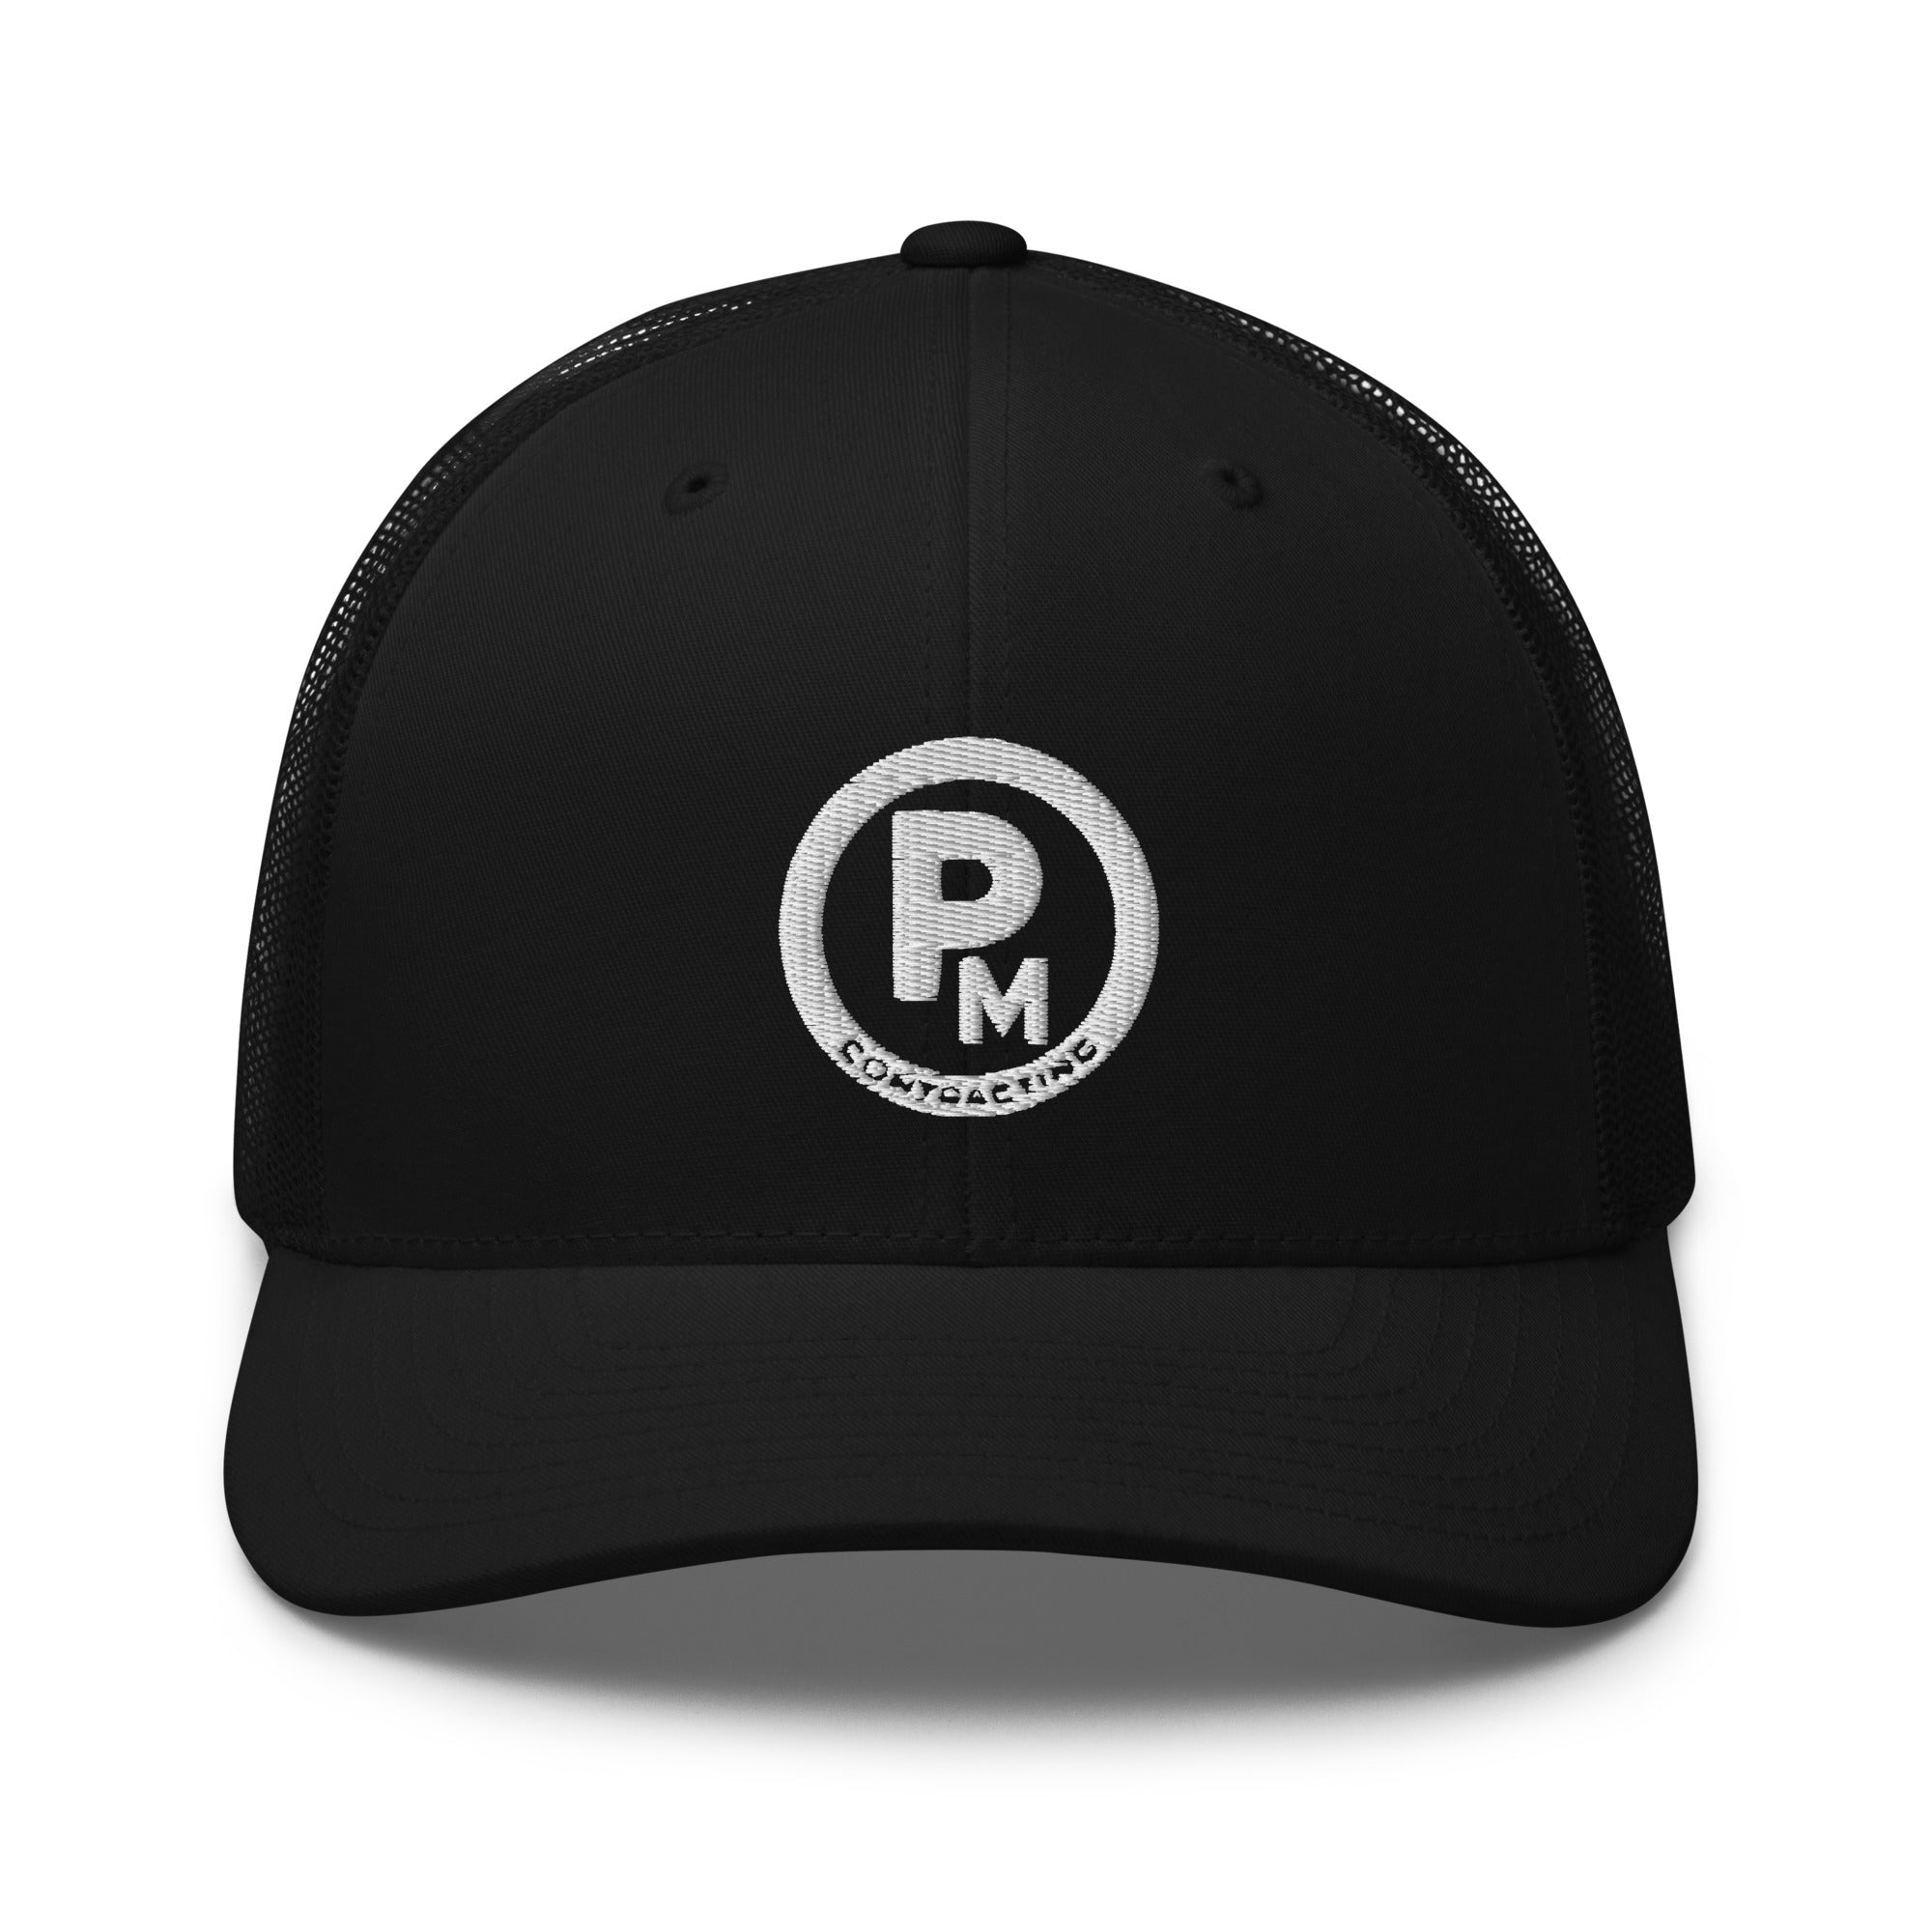 PM Contracting Retro Trucker Hat